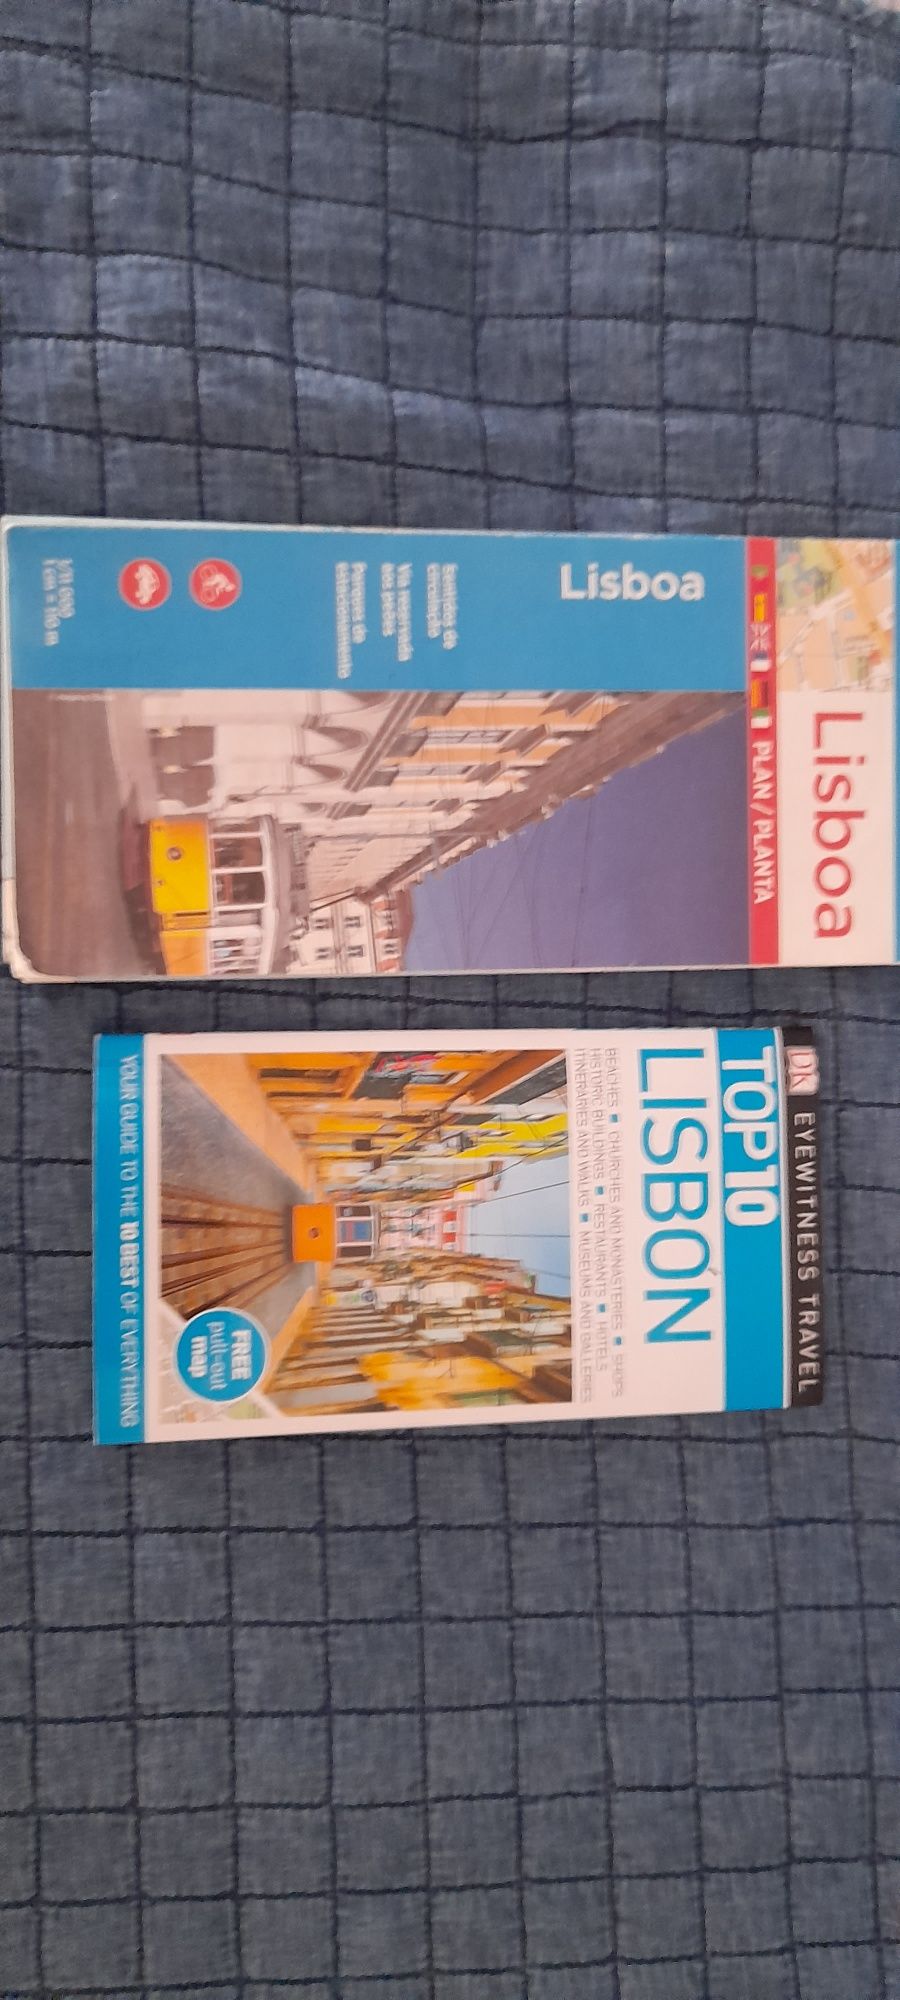 Guia e mapa de Lisboa em inglês